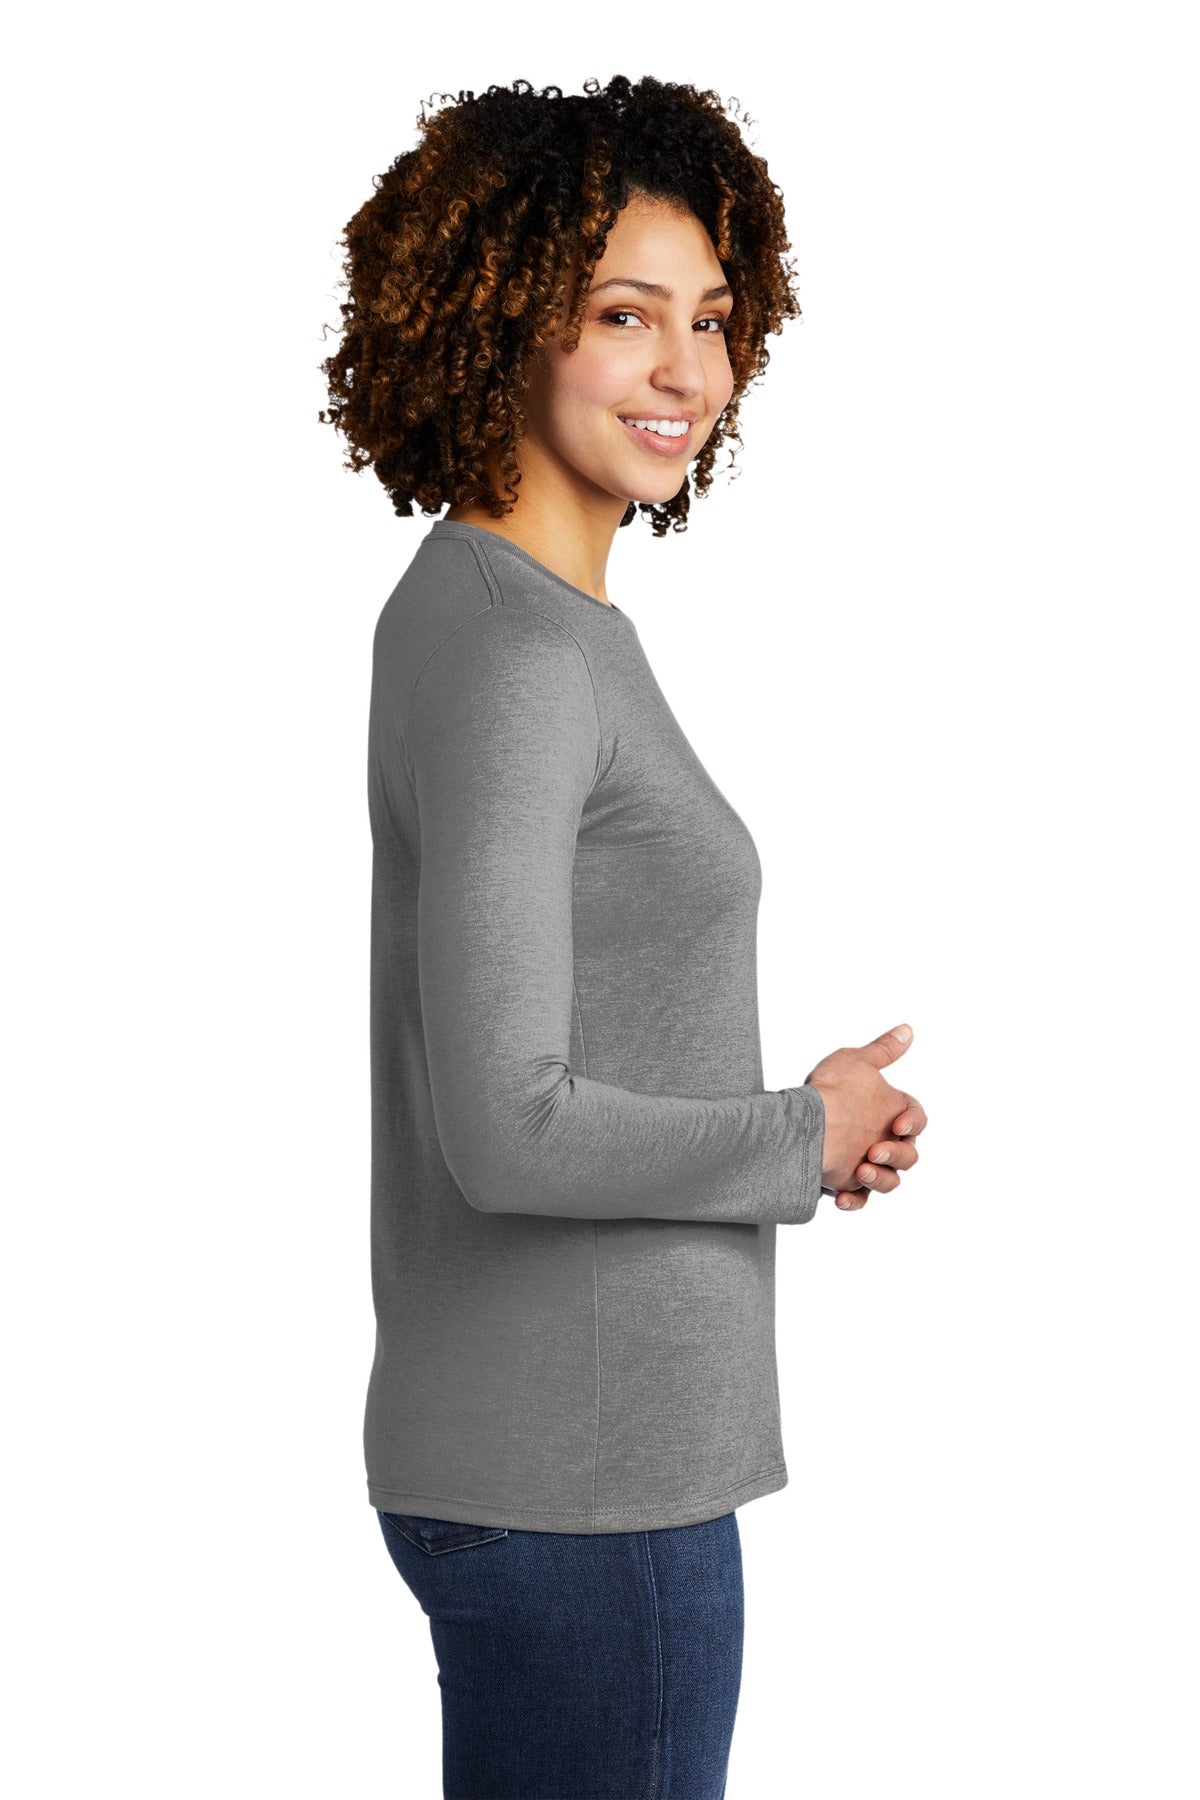 Allmade ® Women's Tri-Blend Long Sleeve Tee AL6008 - DFW Impression